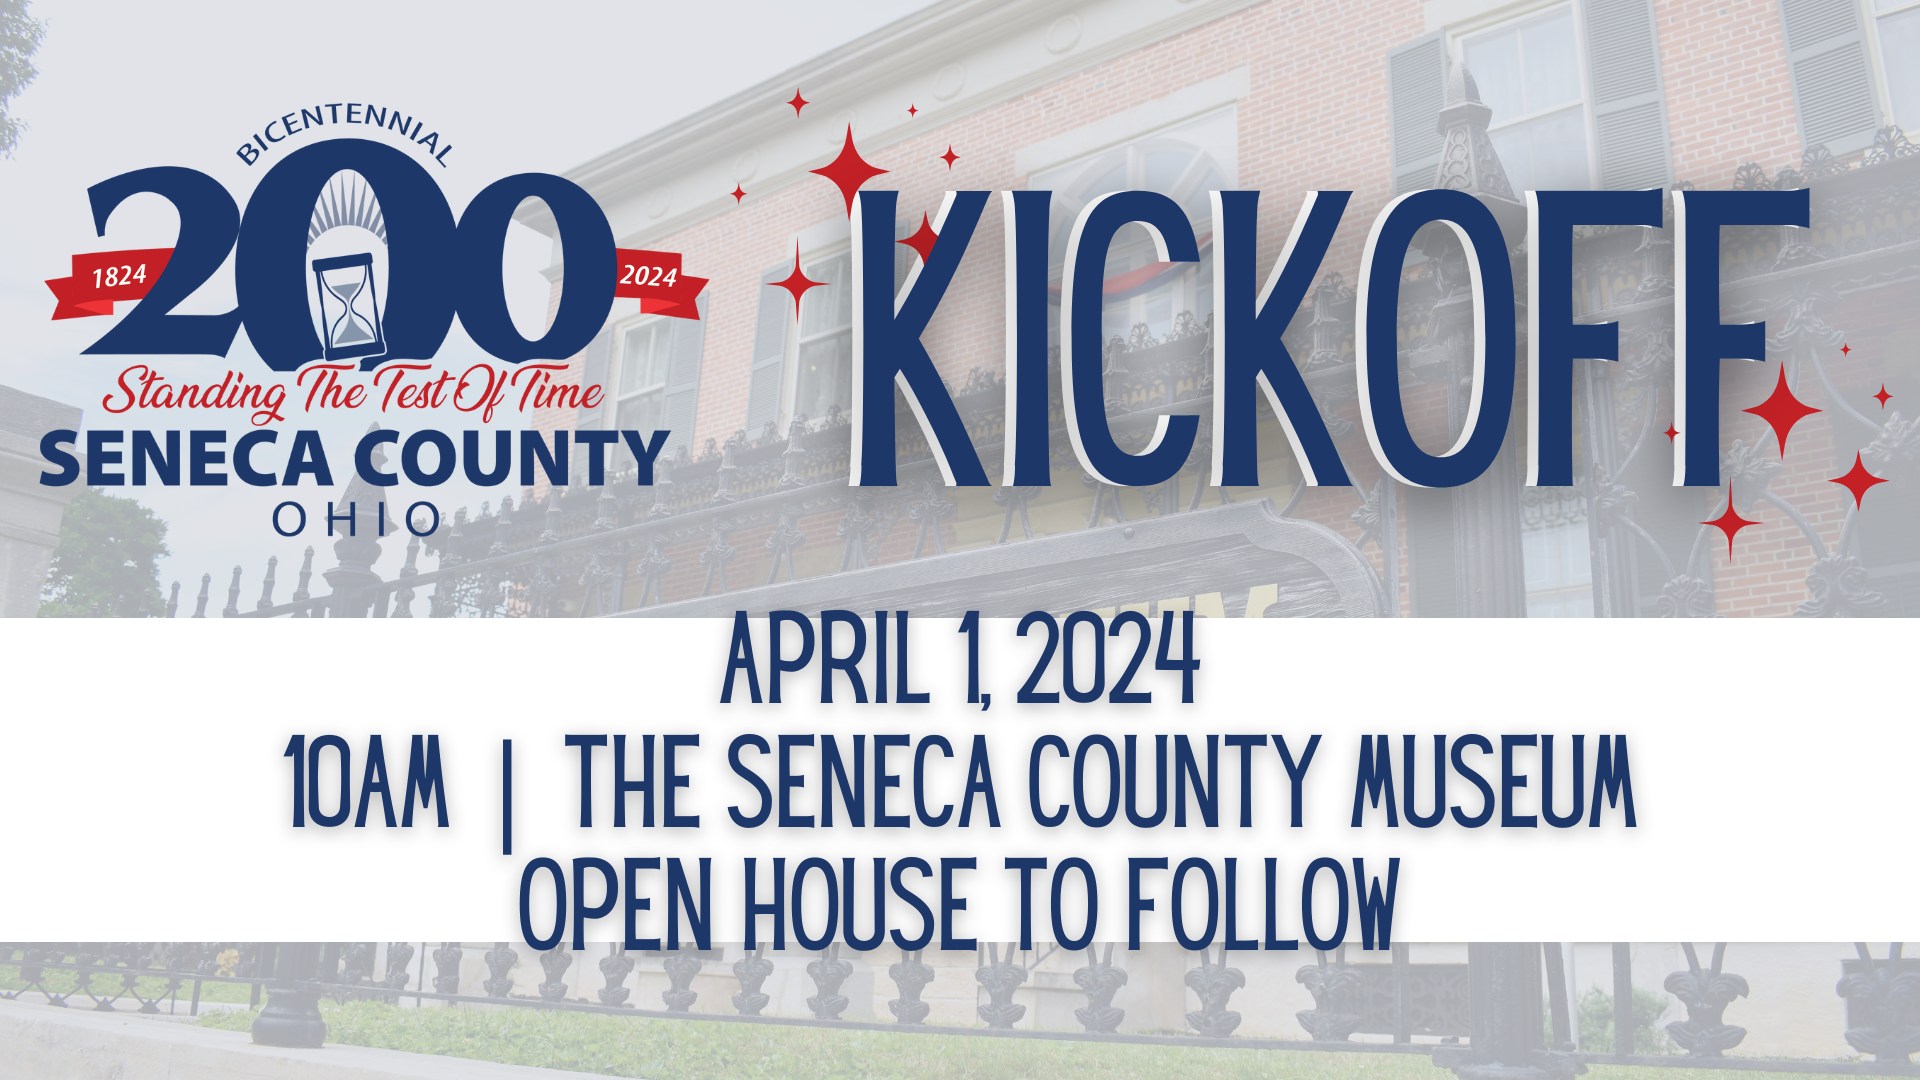 Seneca County Bicentennial | Kick-Off